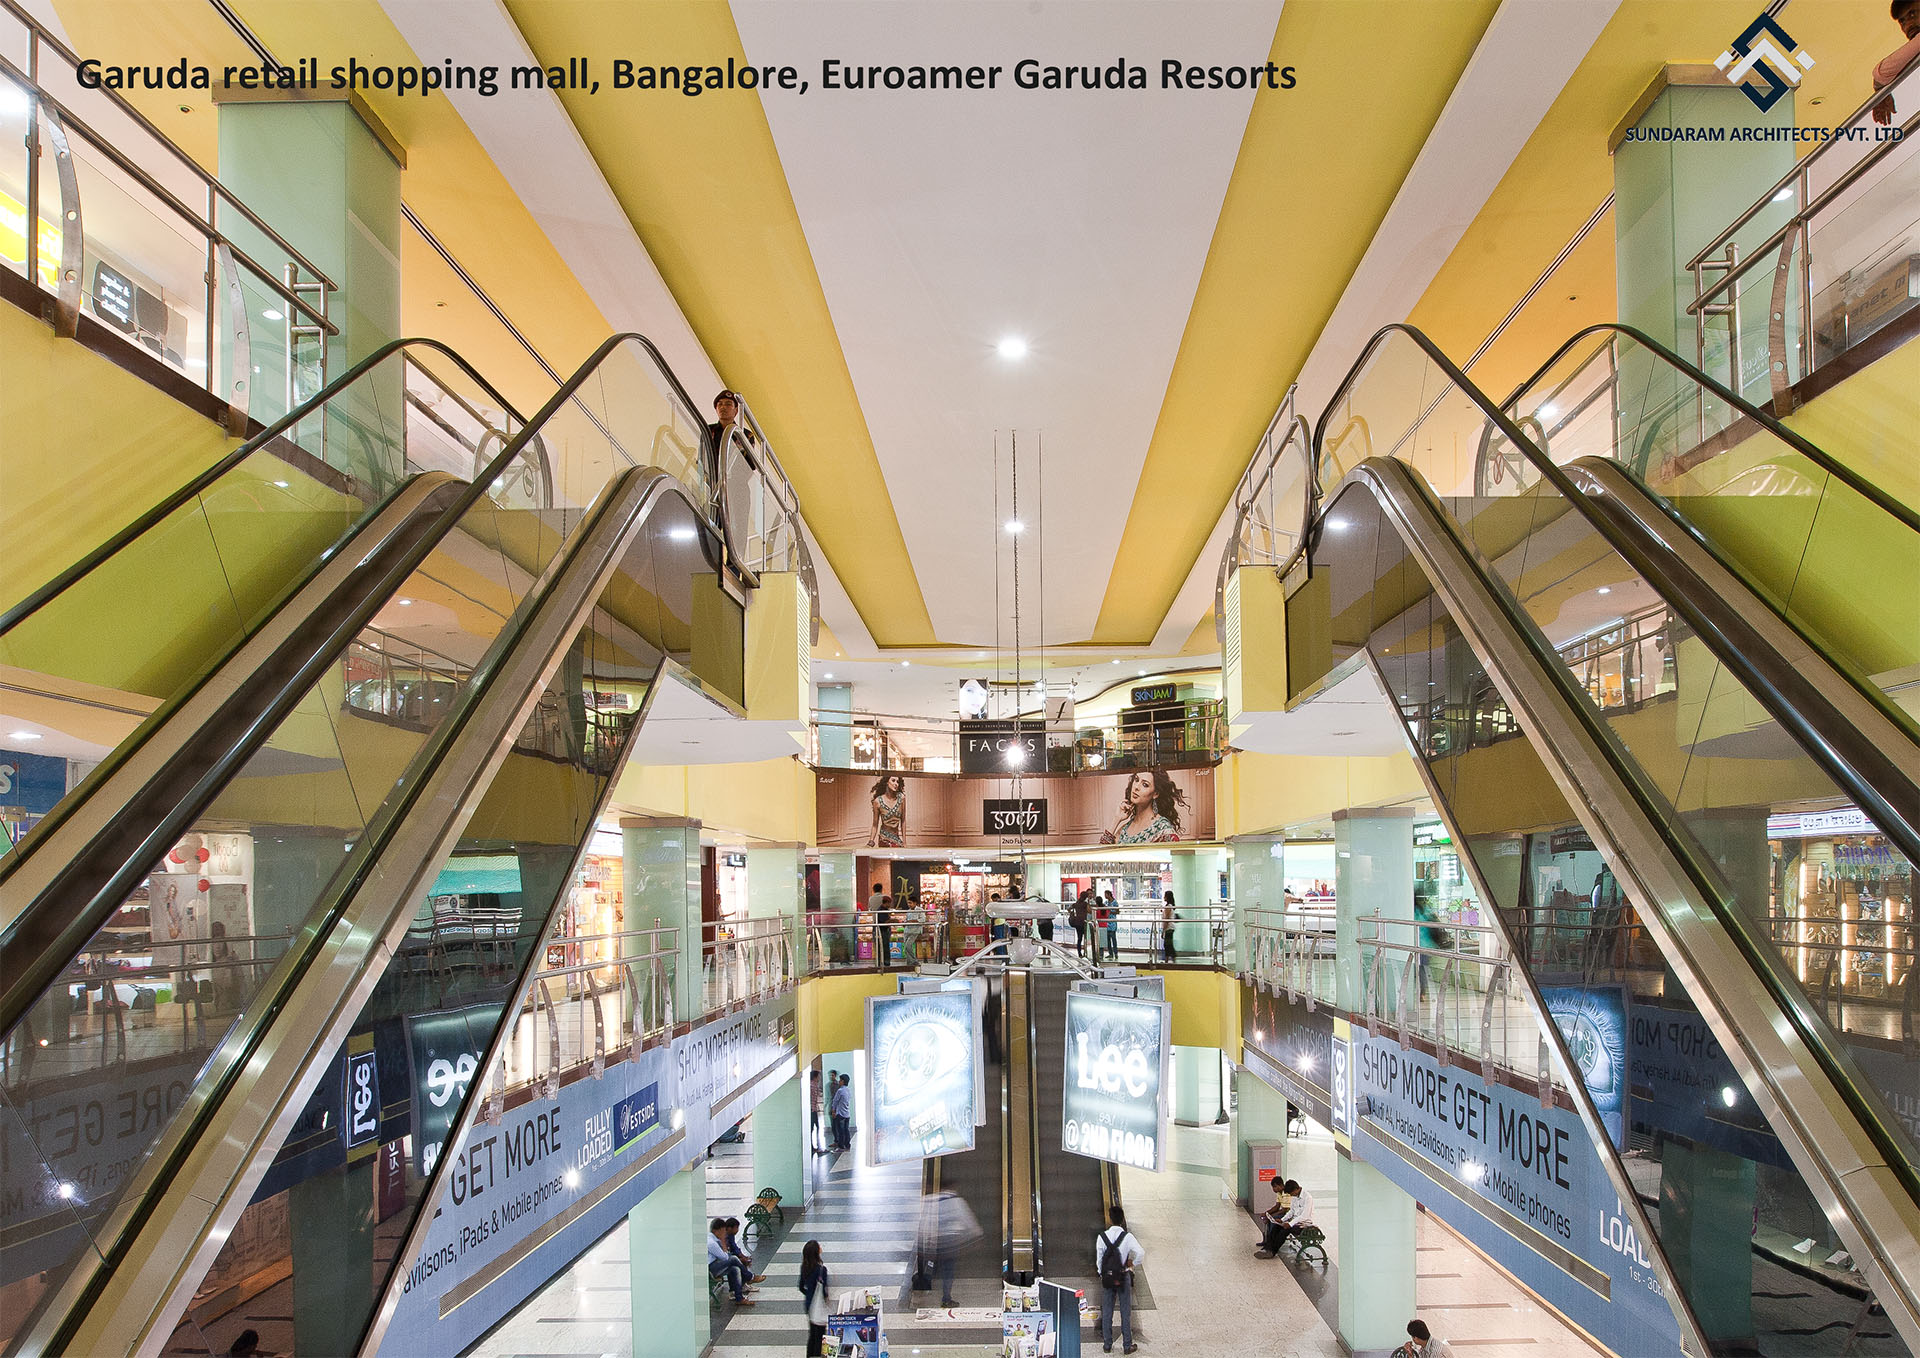 Sundaram Architects designed Garuda Retail Shopping Mall, Bangalore, Euroamer Garuda Resorts